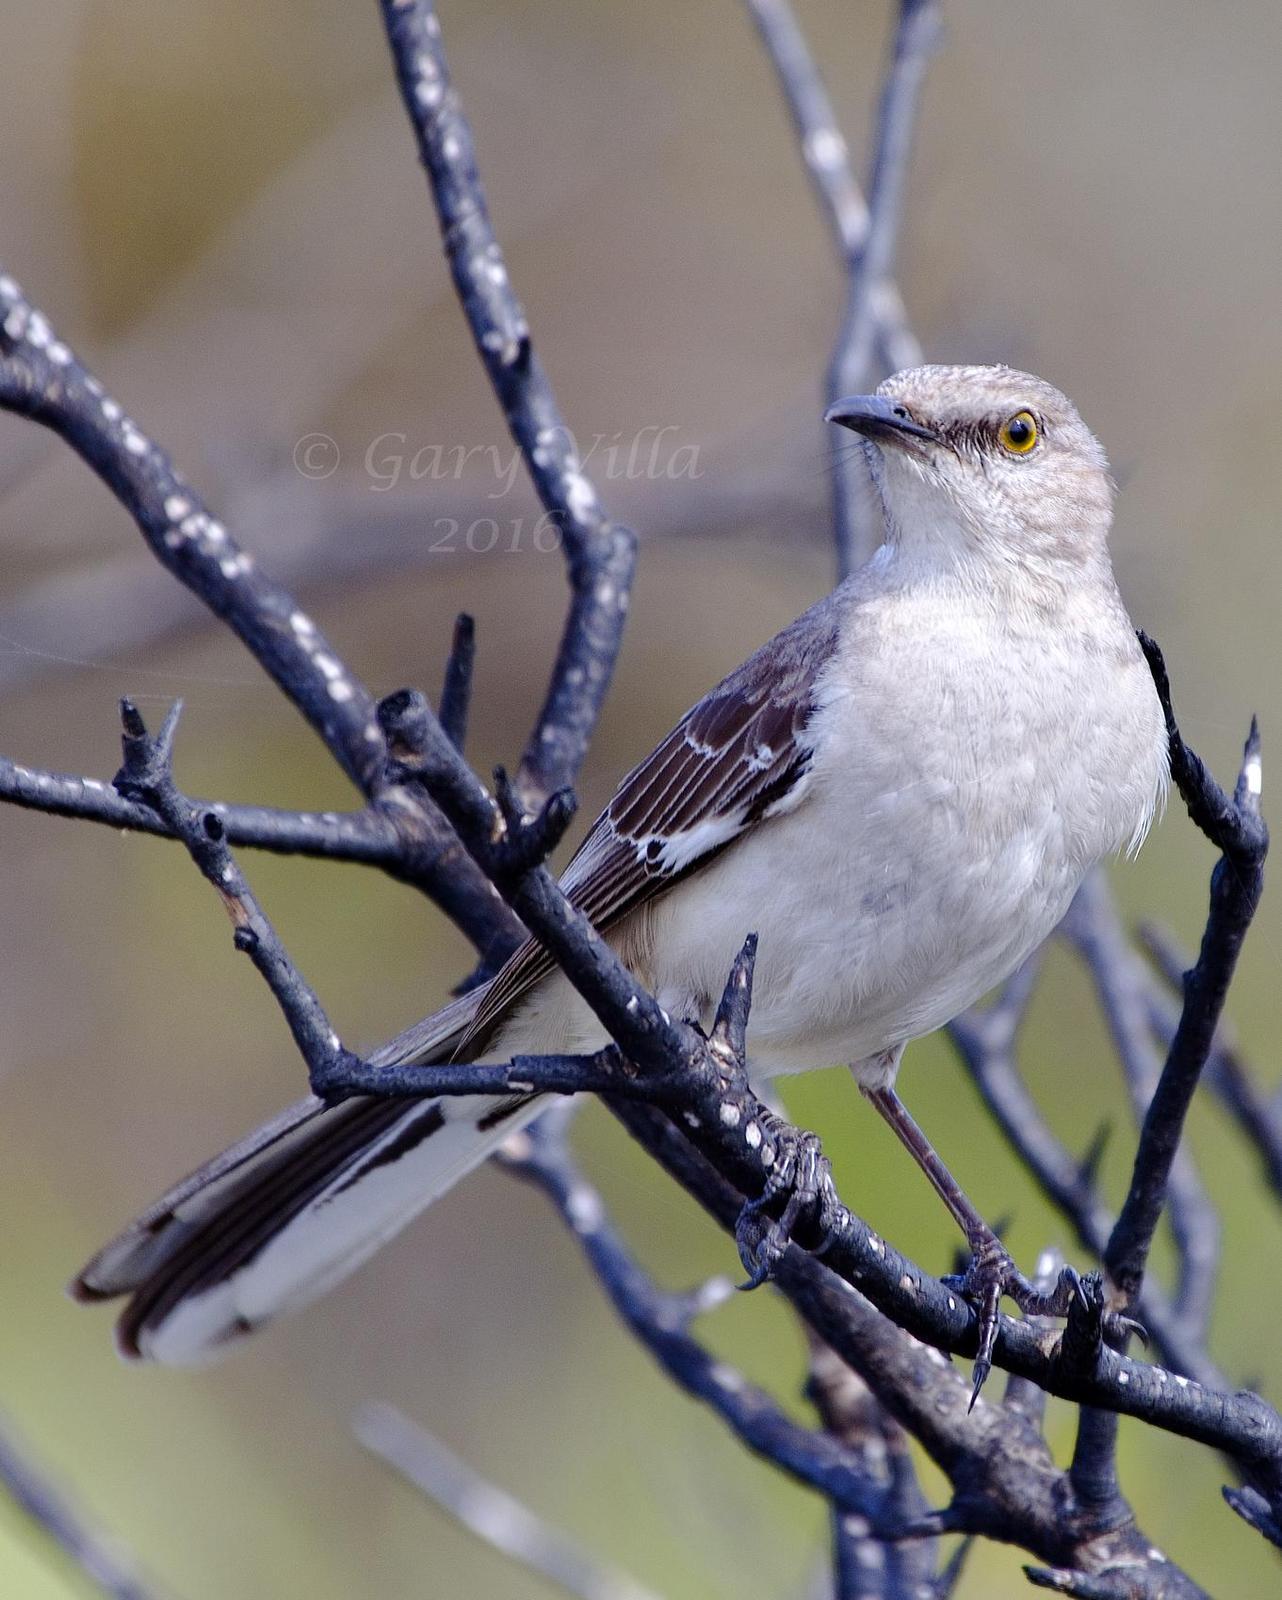 Northern Mockingbird Photo by Gary Villa